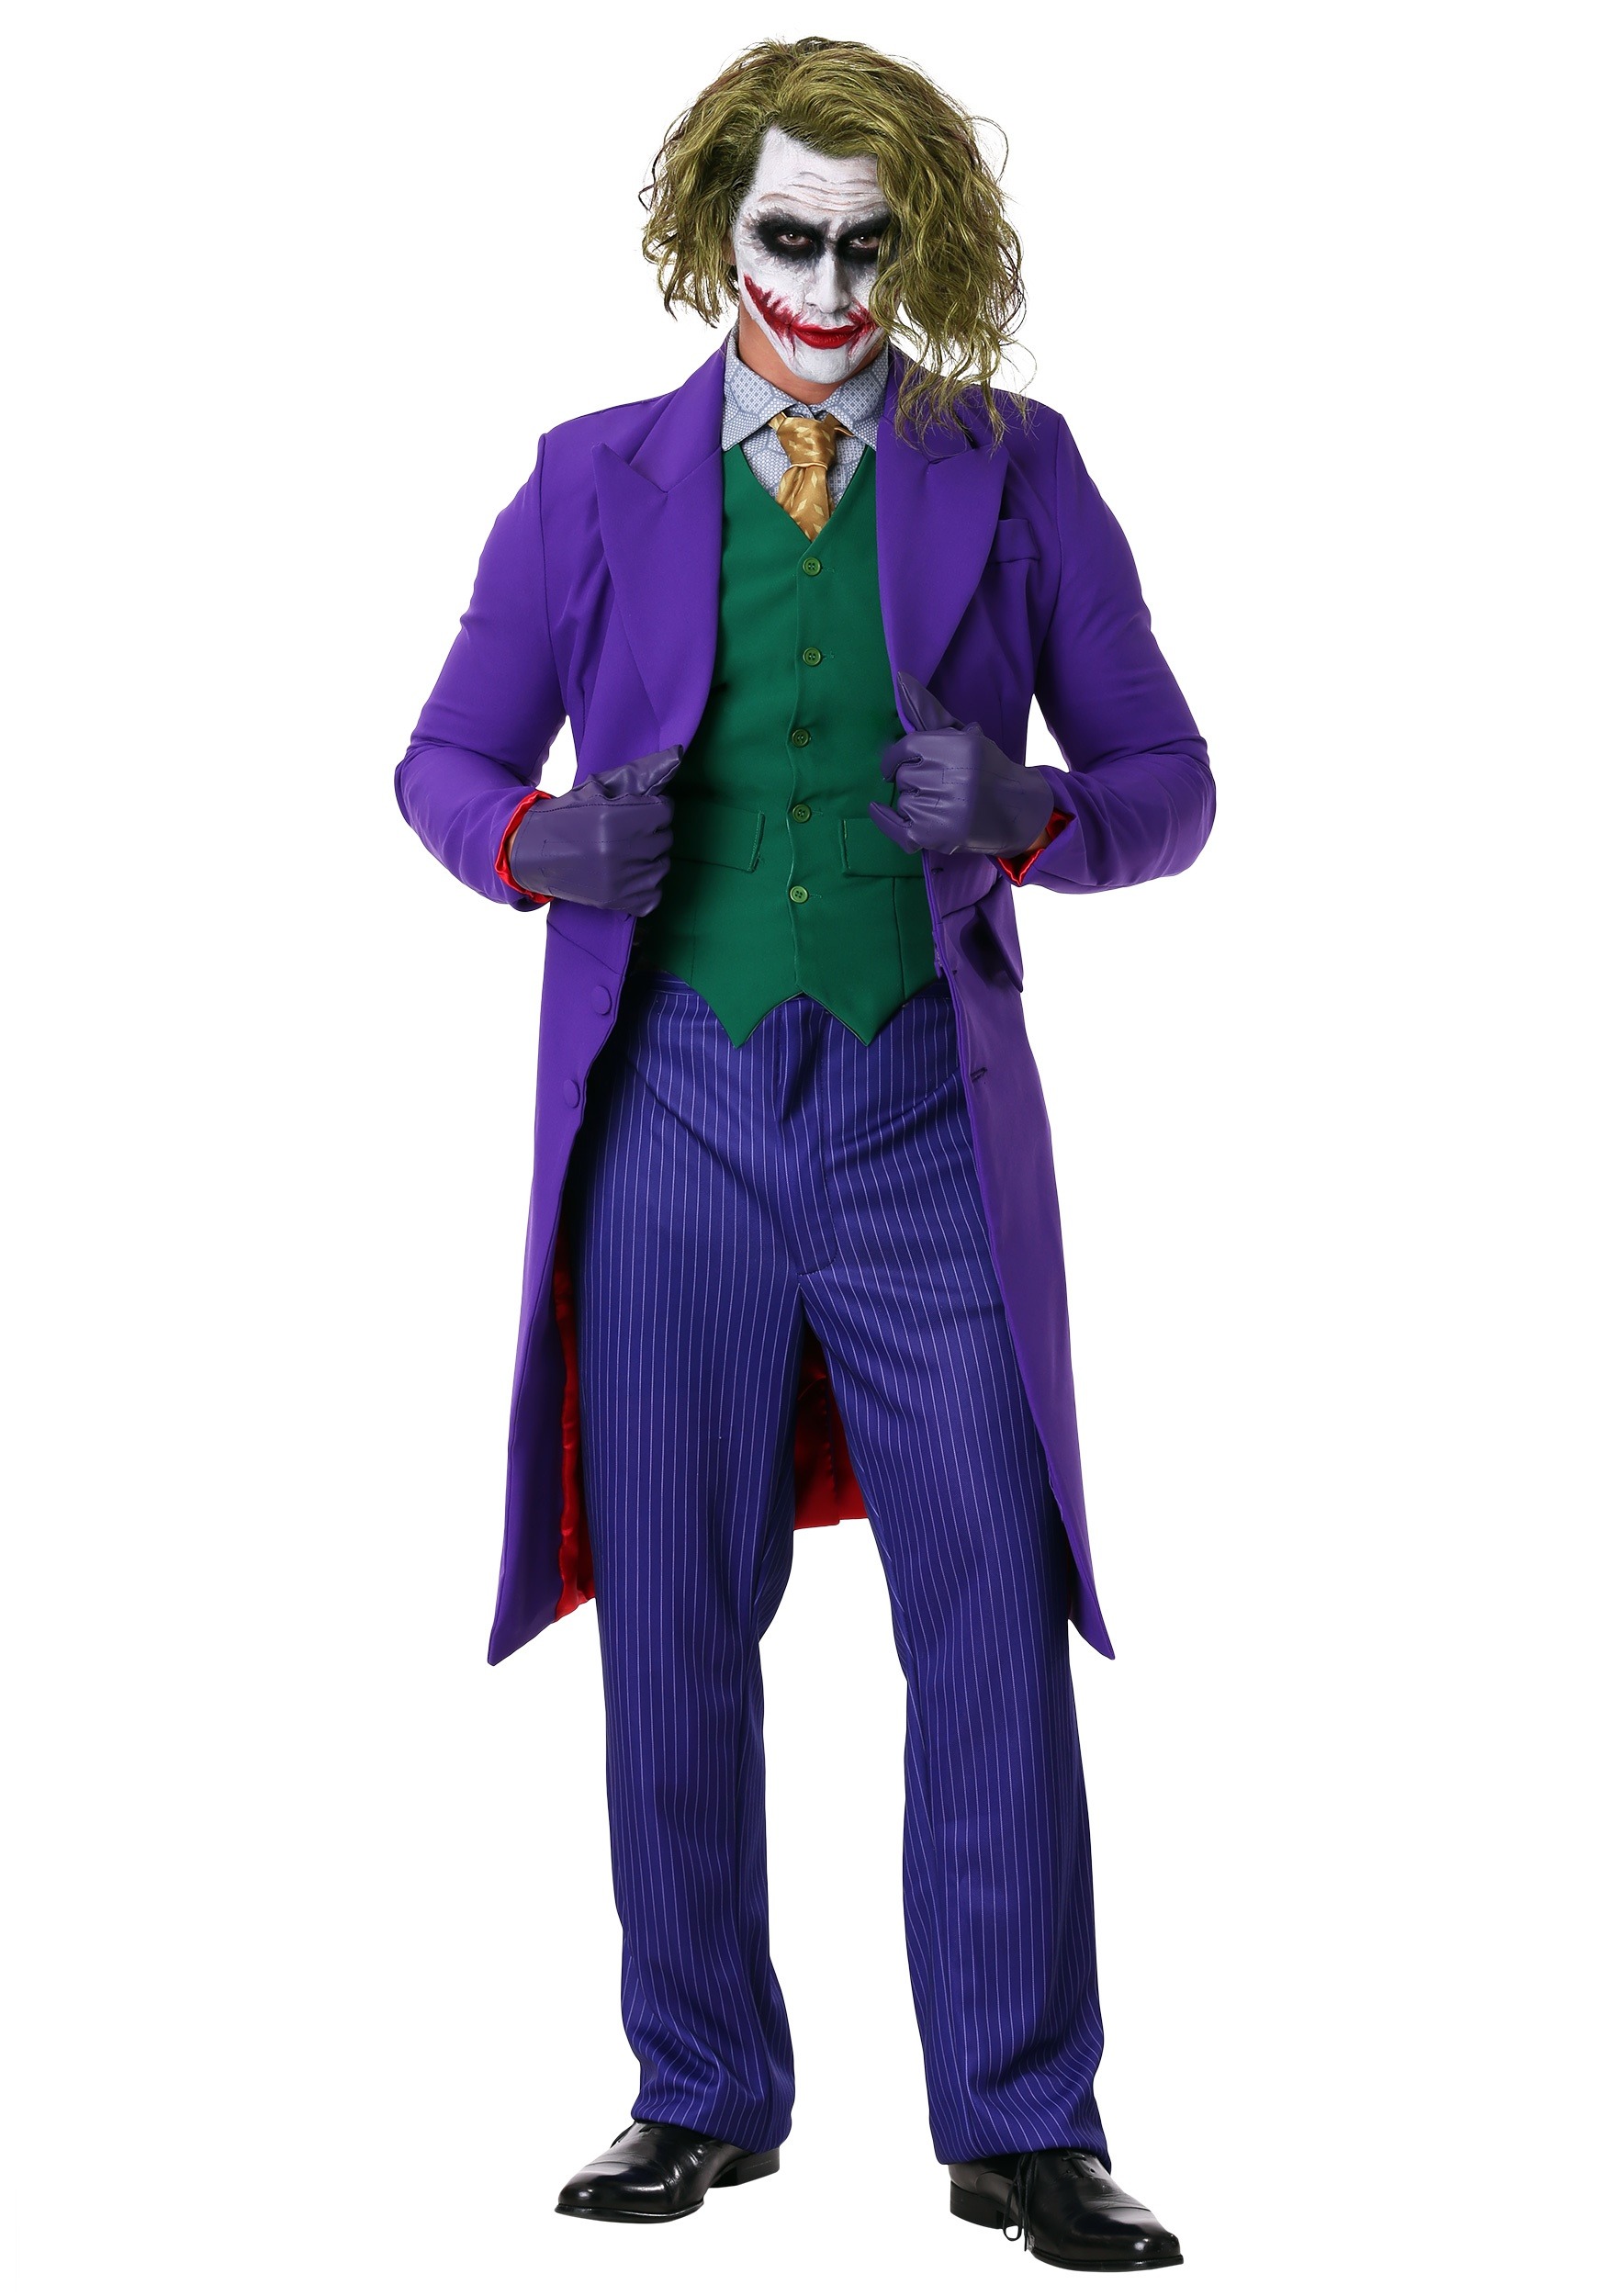 30.) Premium DC Comics The Joker Men's Costume